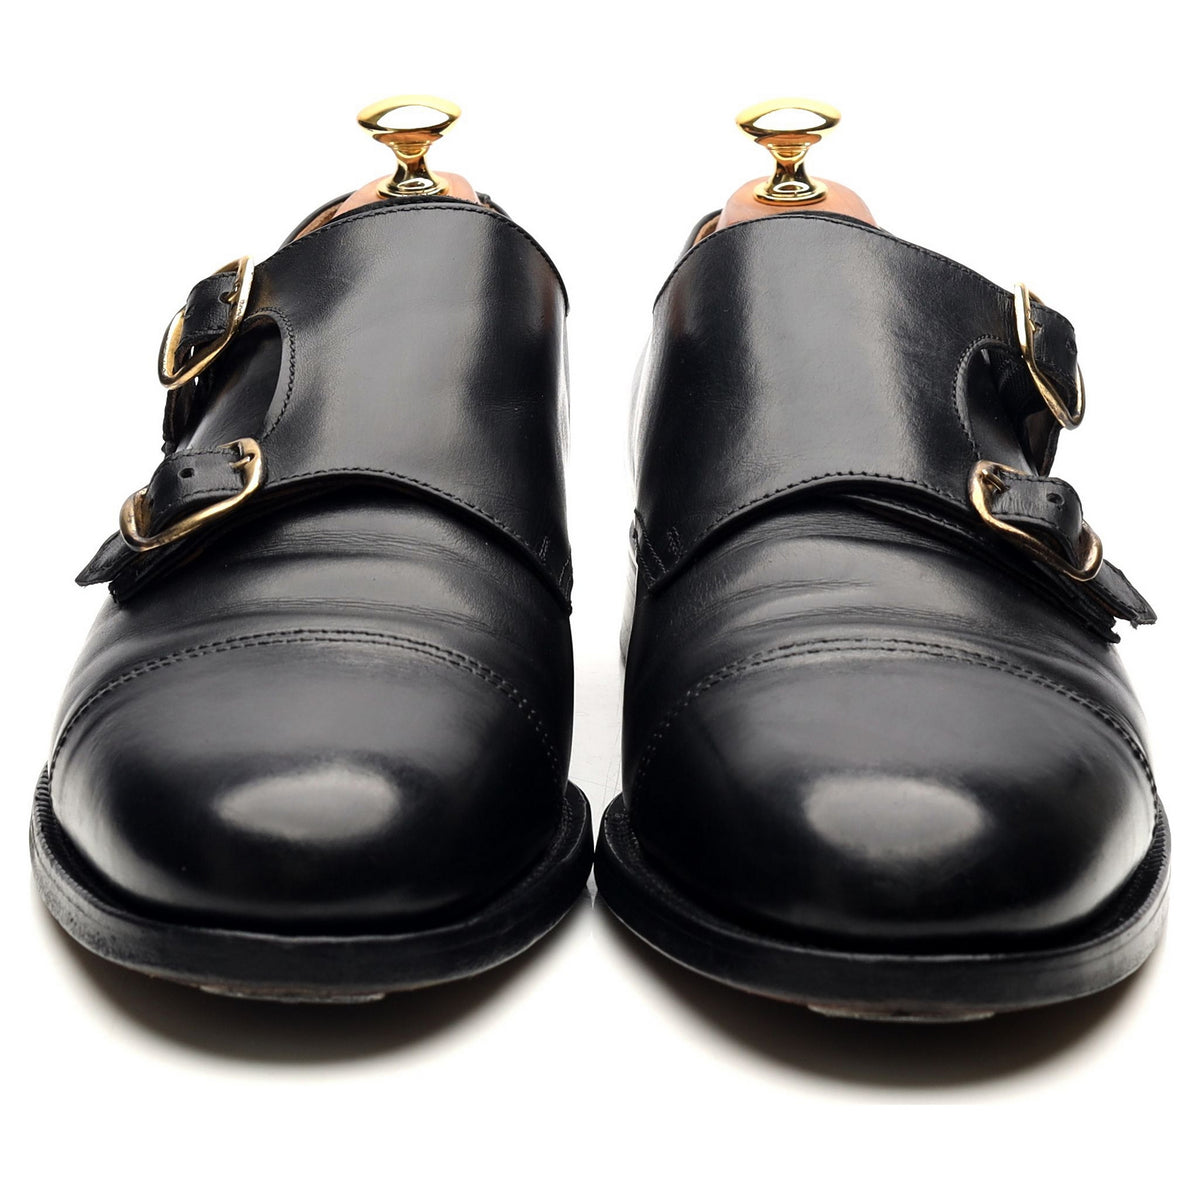 Bowen Black Leather Double Monk Strap UK 10.5